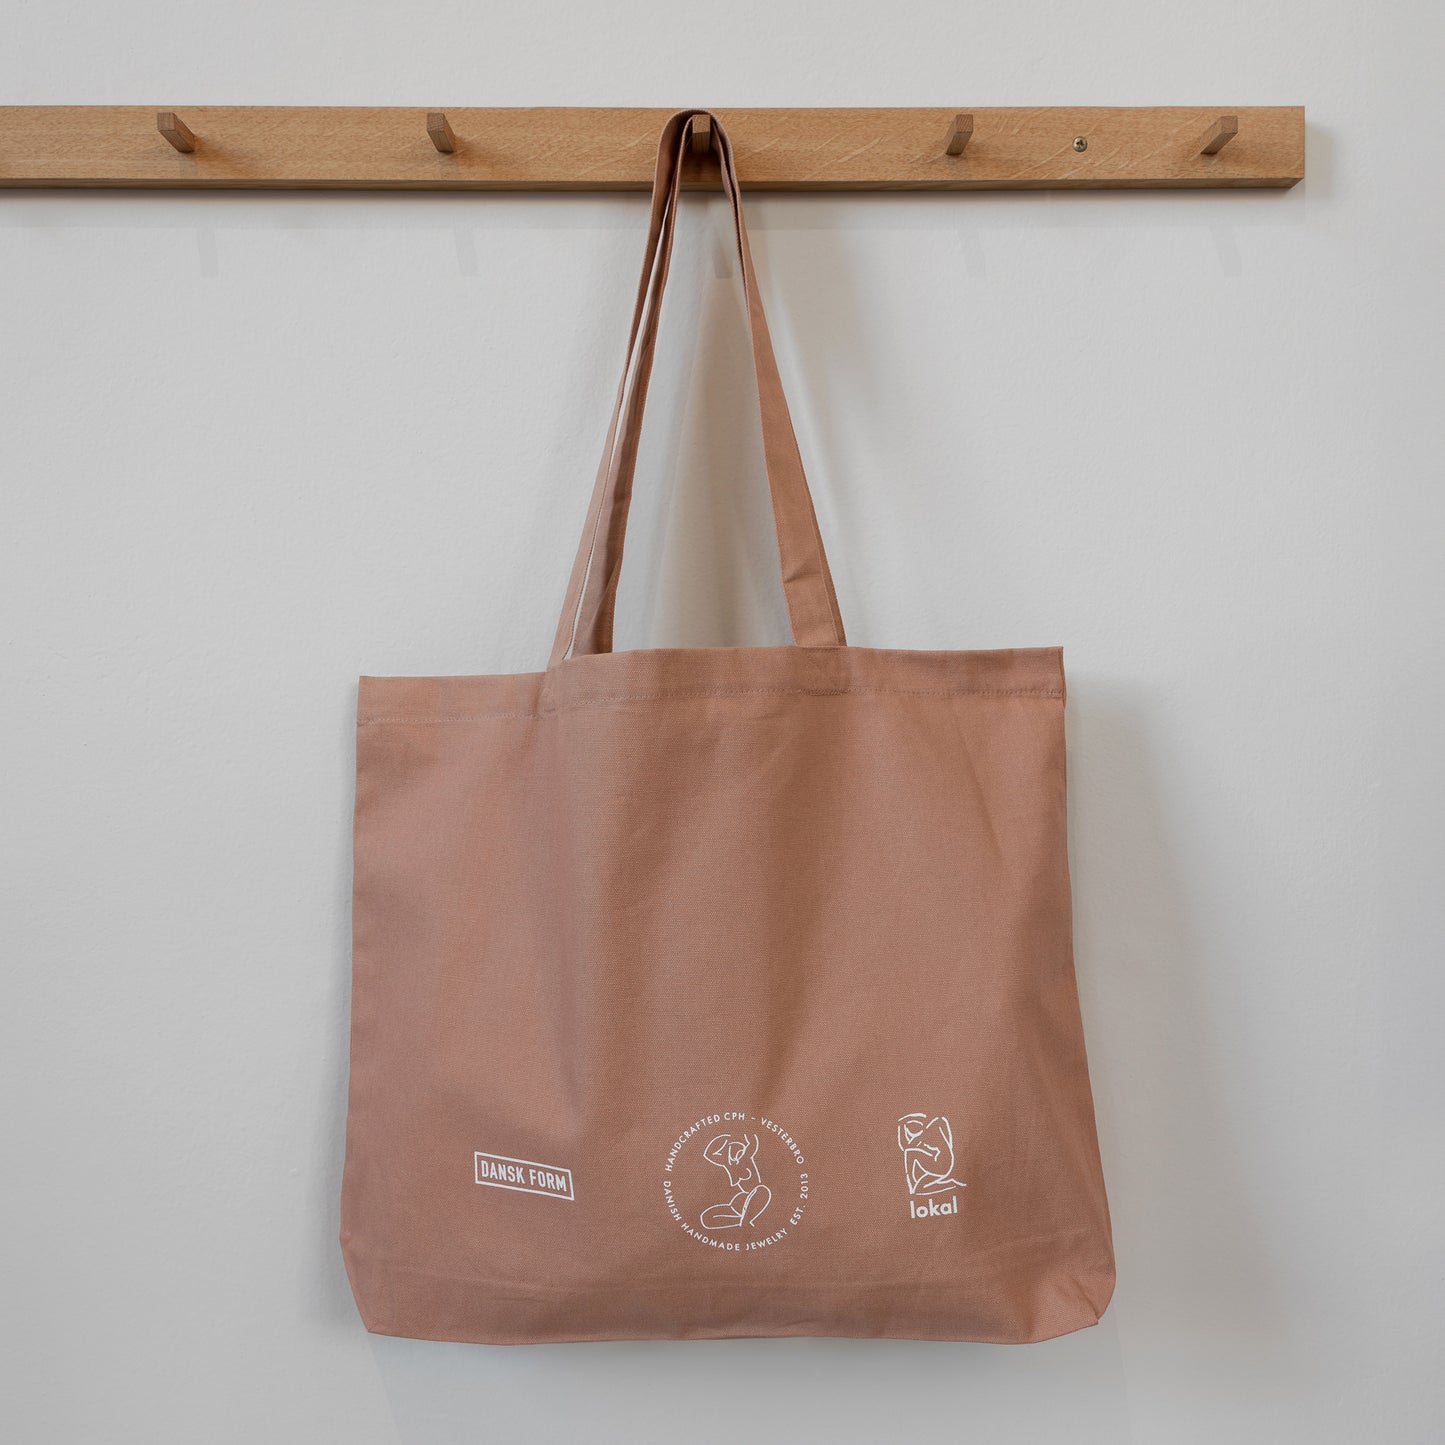 Handcraftedcph shopper tote bag mulepose logo market tote logotryk Copenhagen